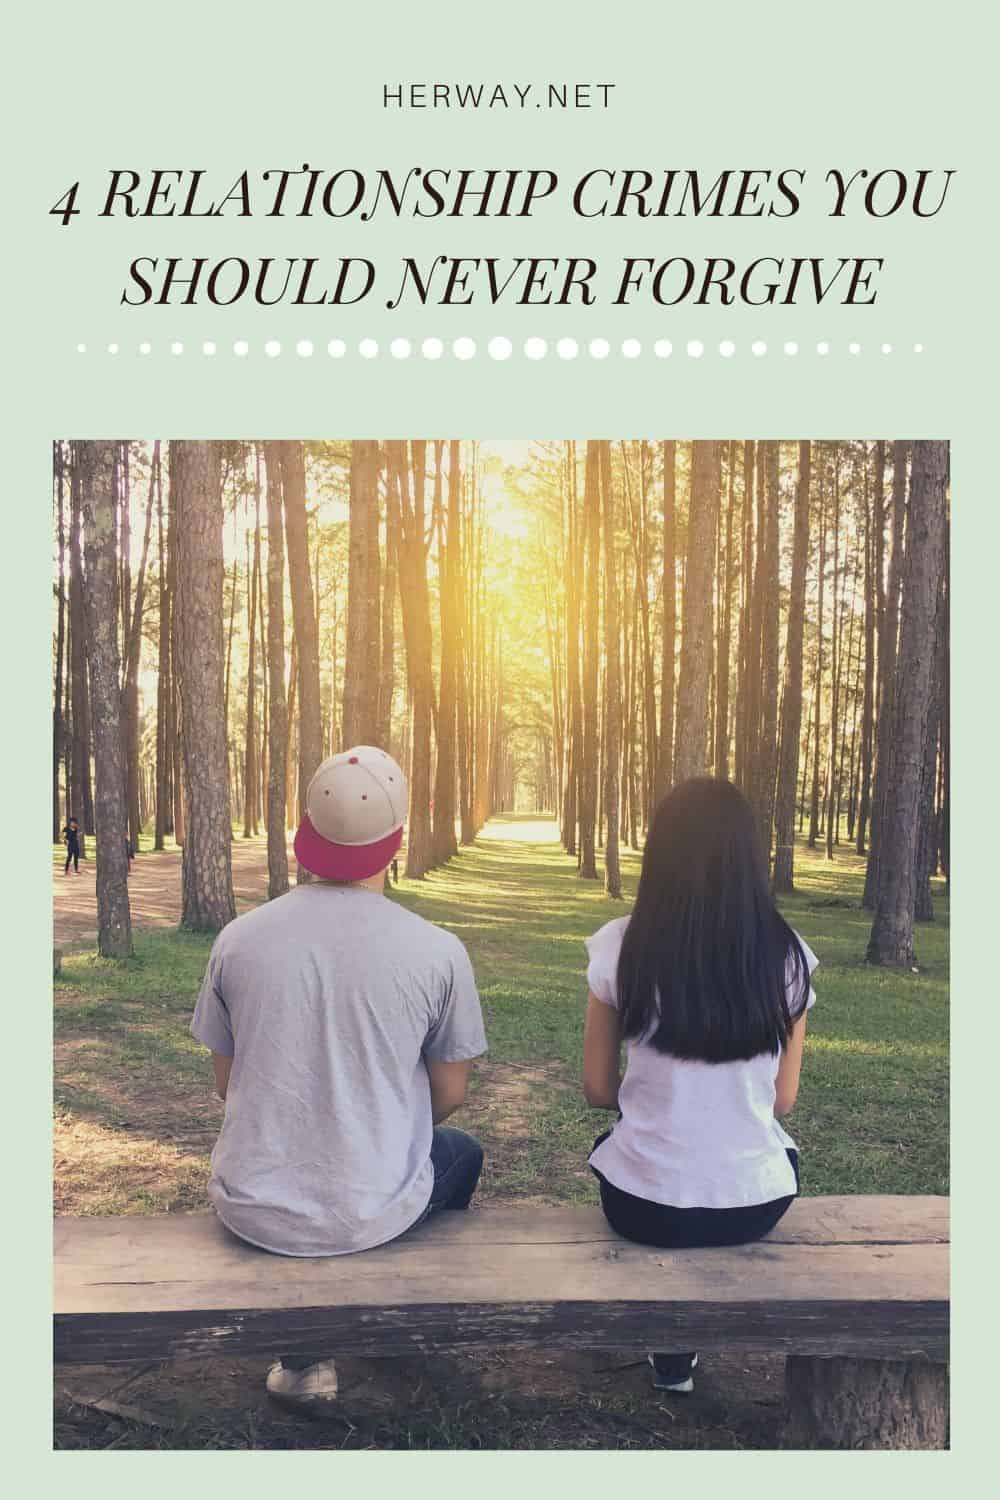 4 RELATIONSHIP CRIMES YOU SHOULD NEVER FORGIVE